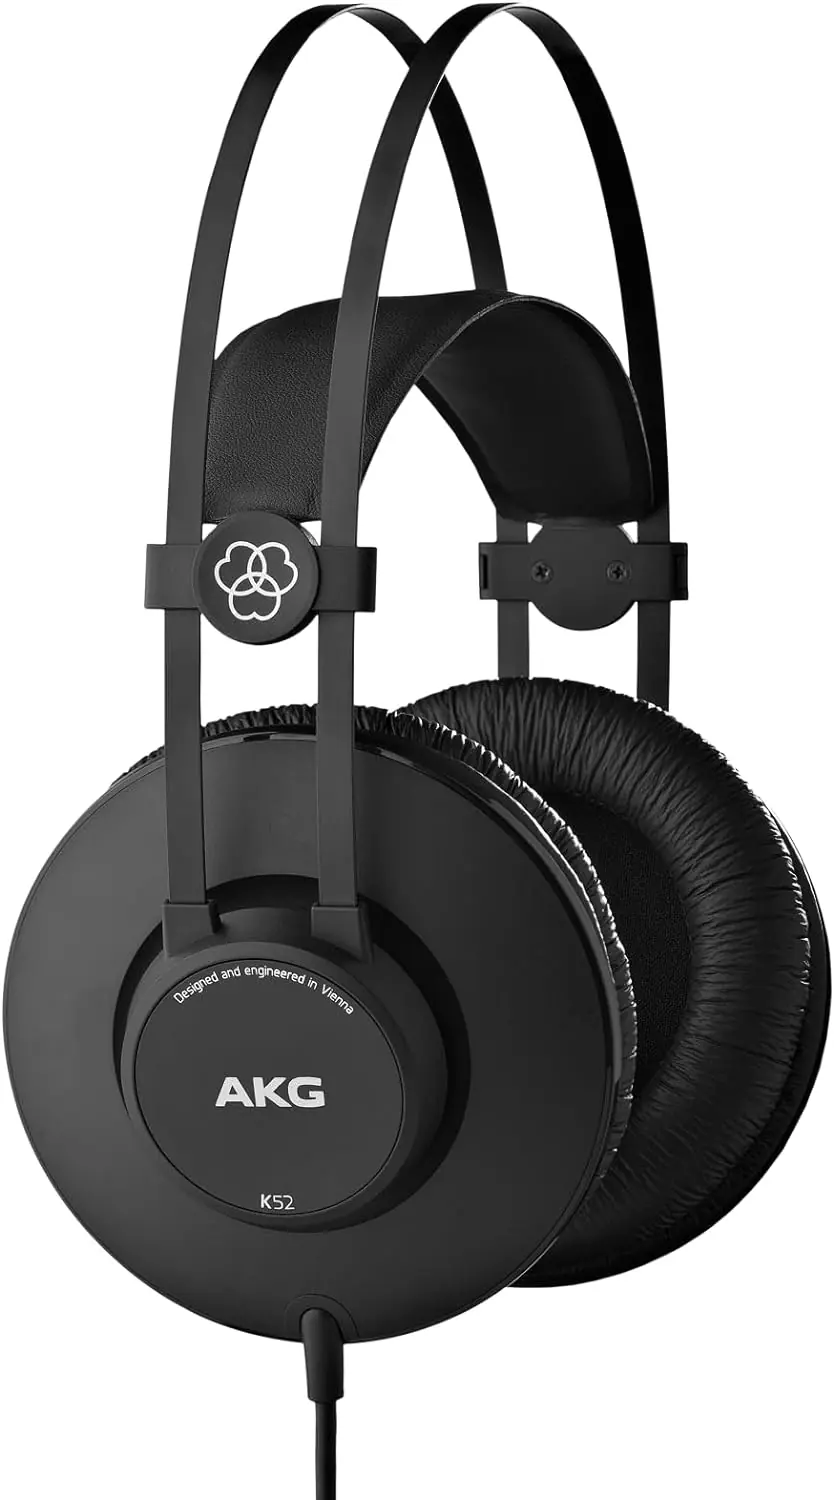 AKG K52 Auriculares para bateria electronica